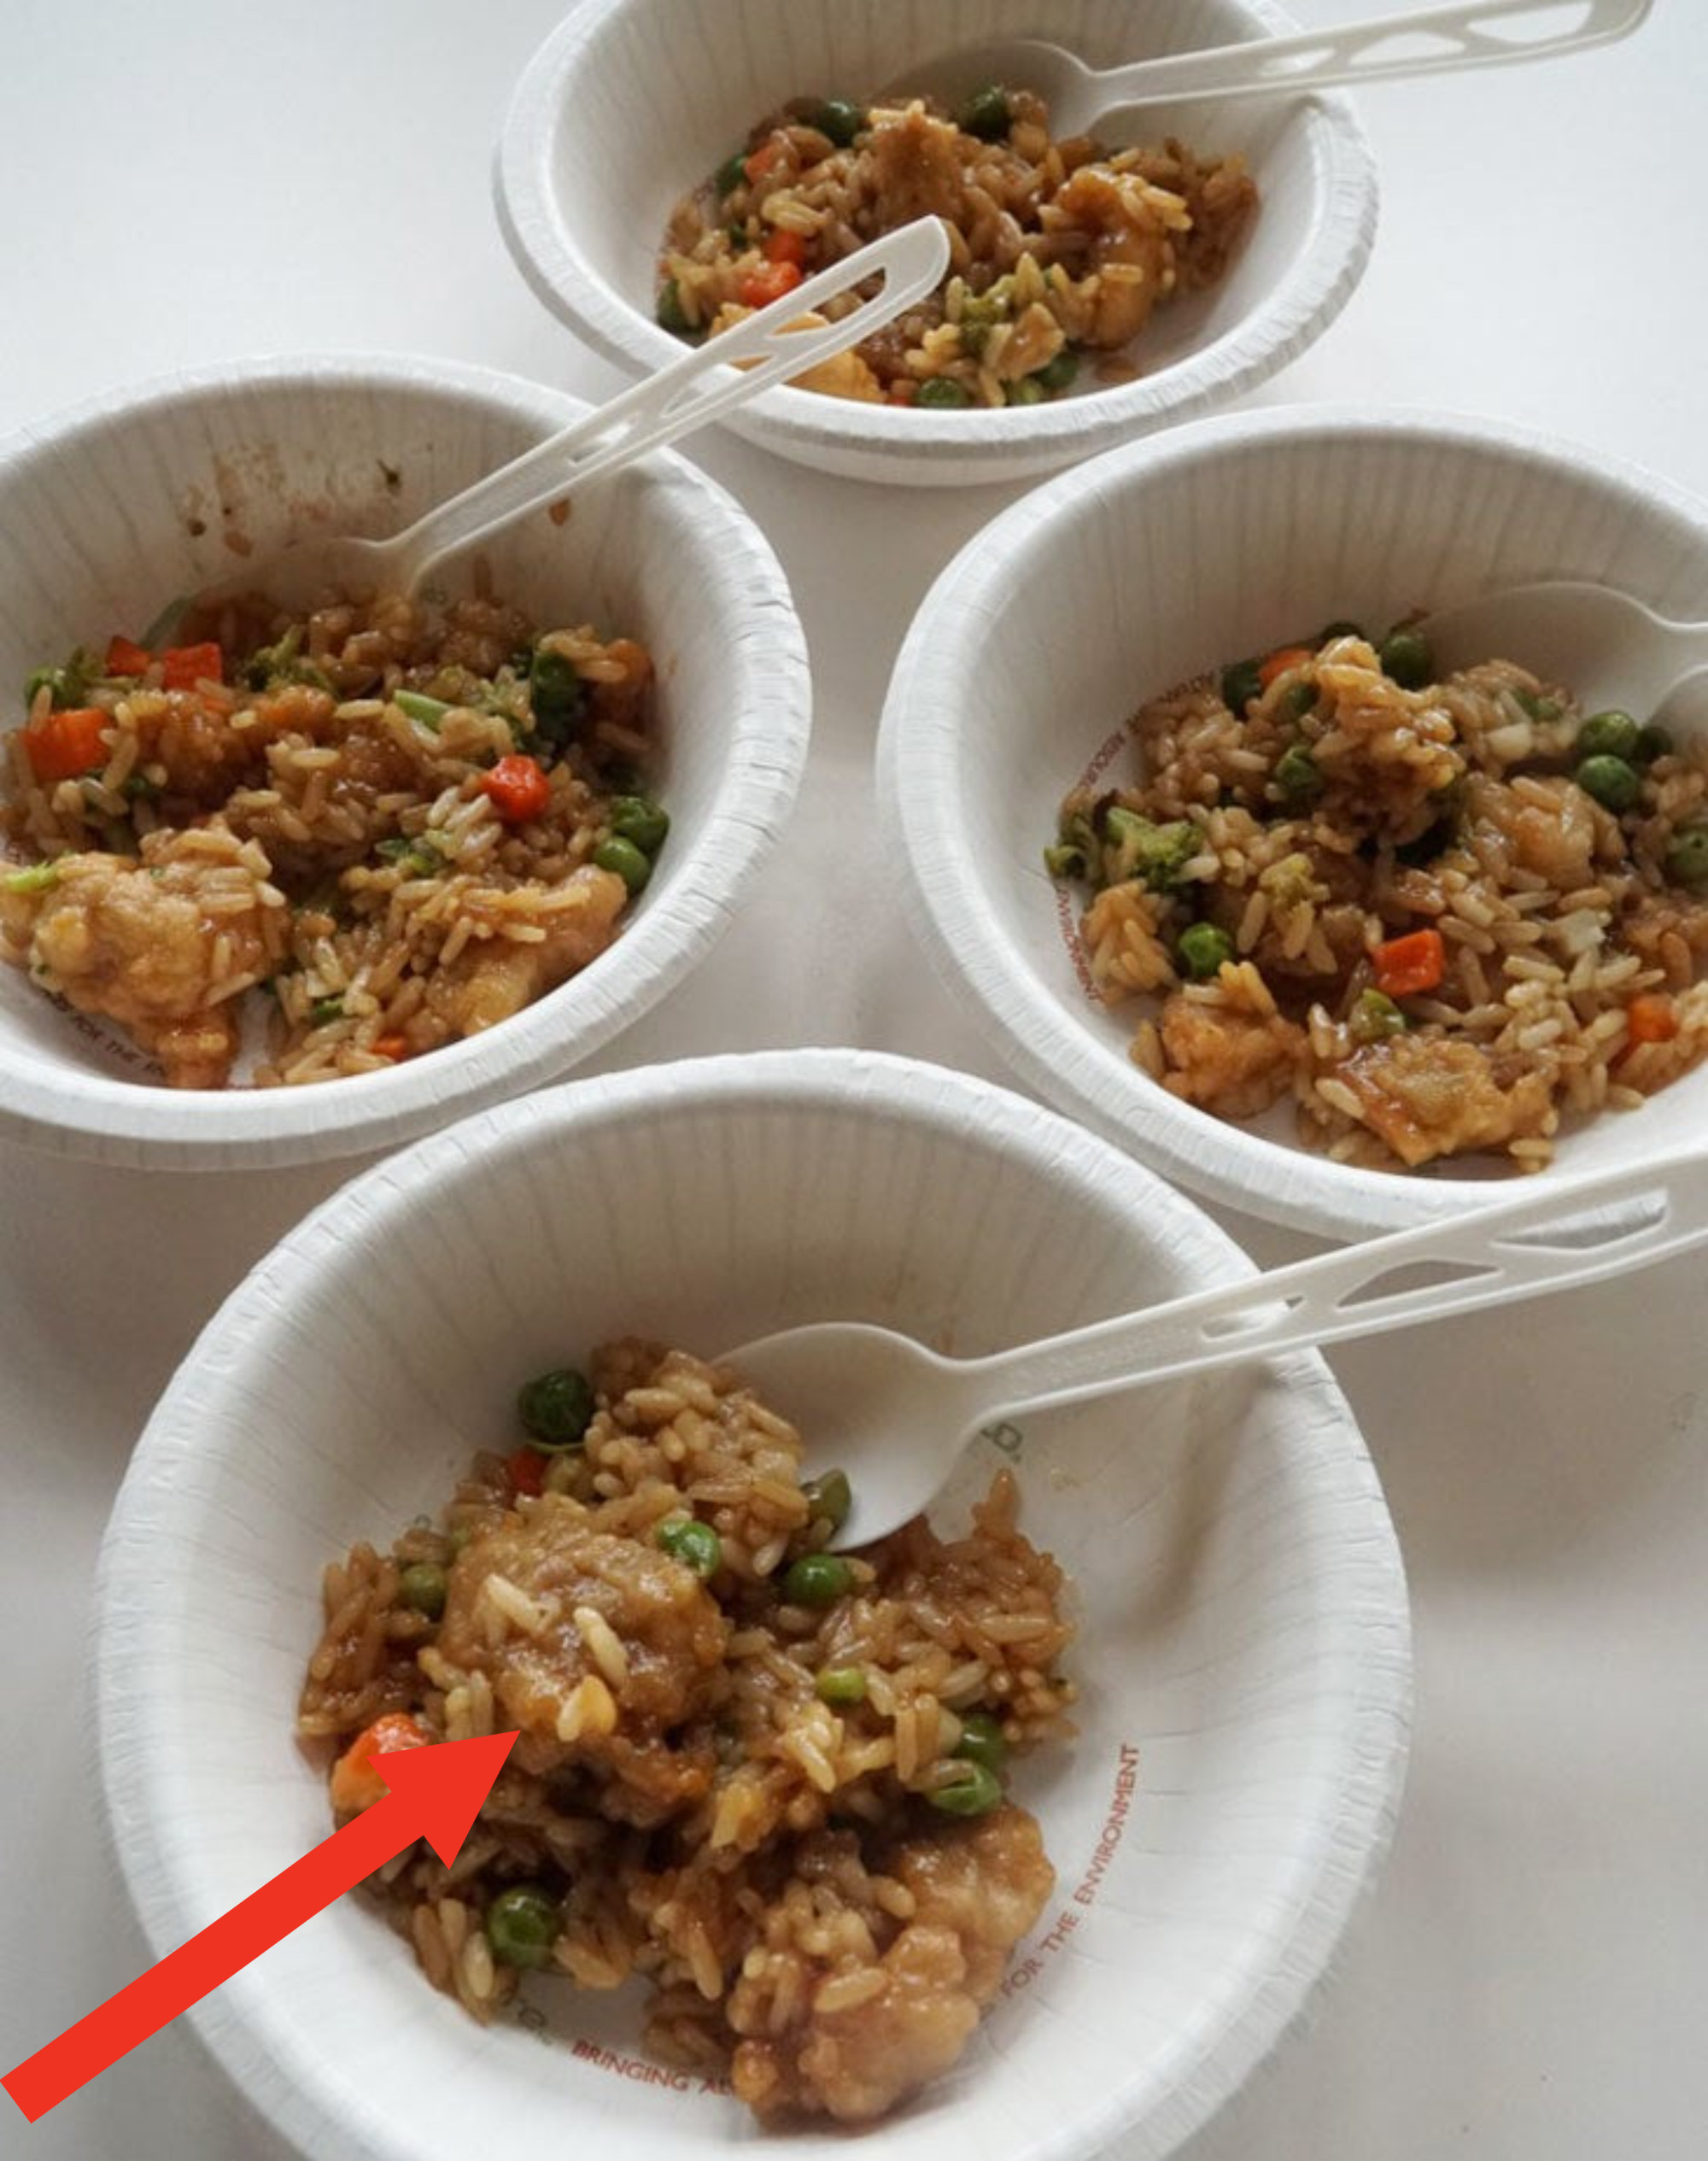 Bowls of Mandarin orange chicken over vegetable fried rice